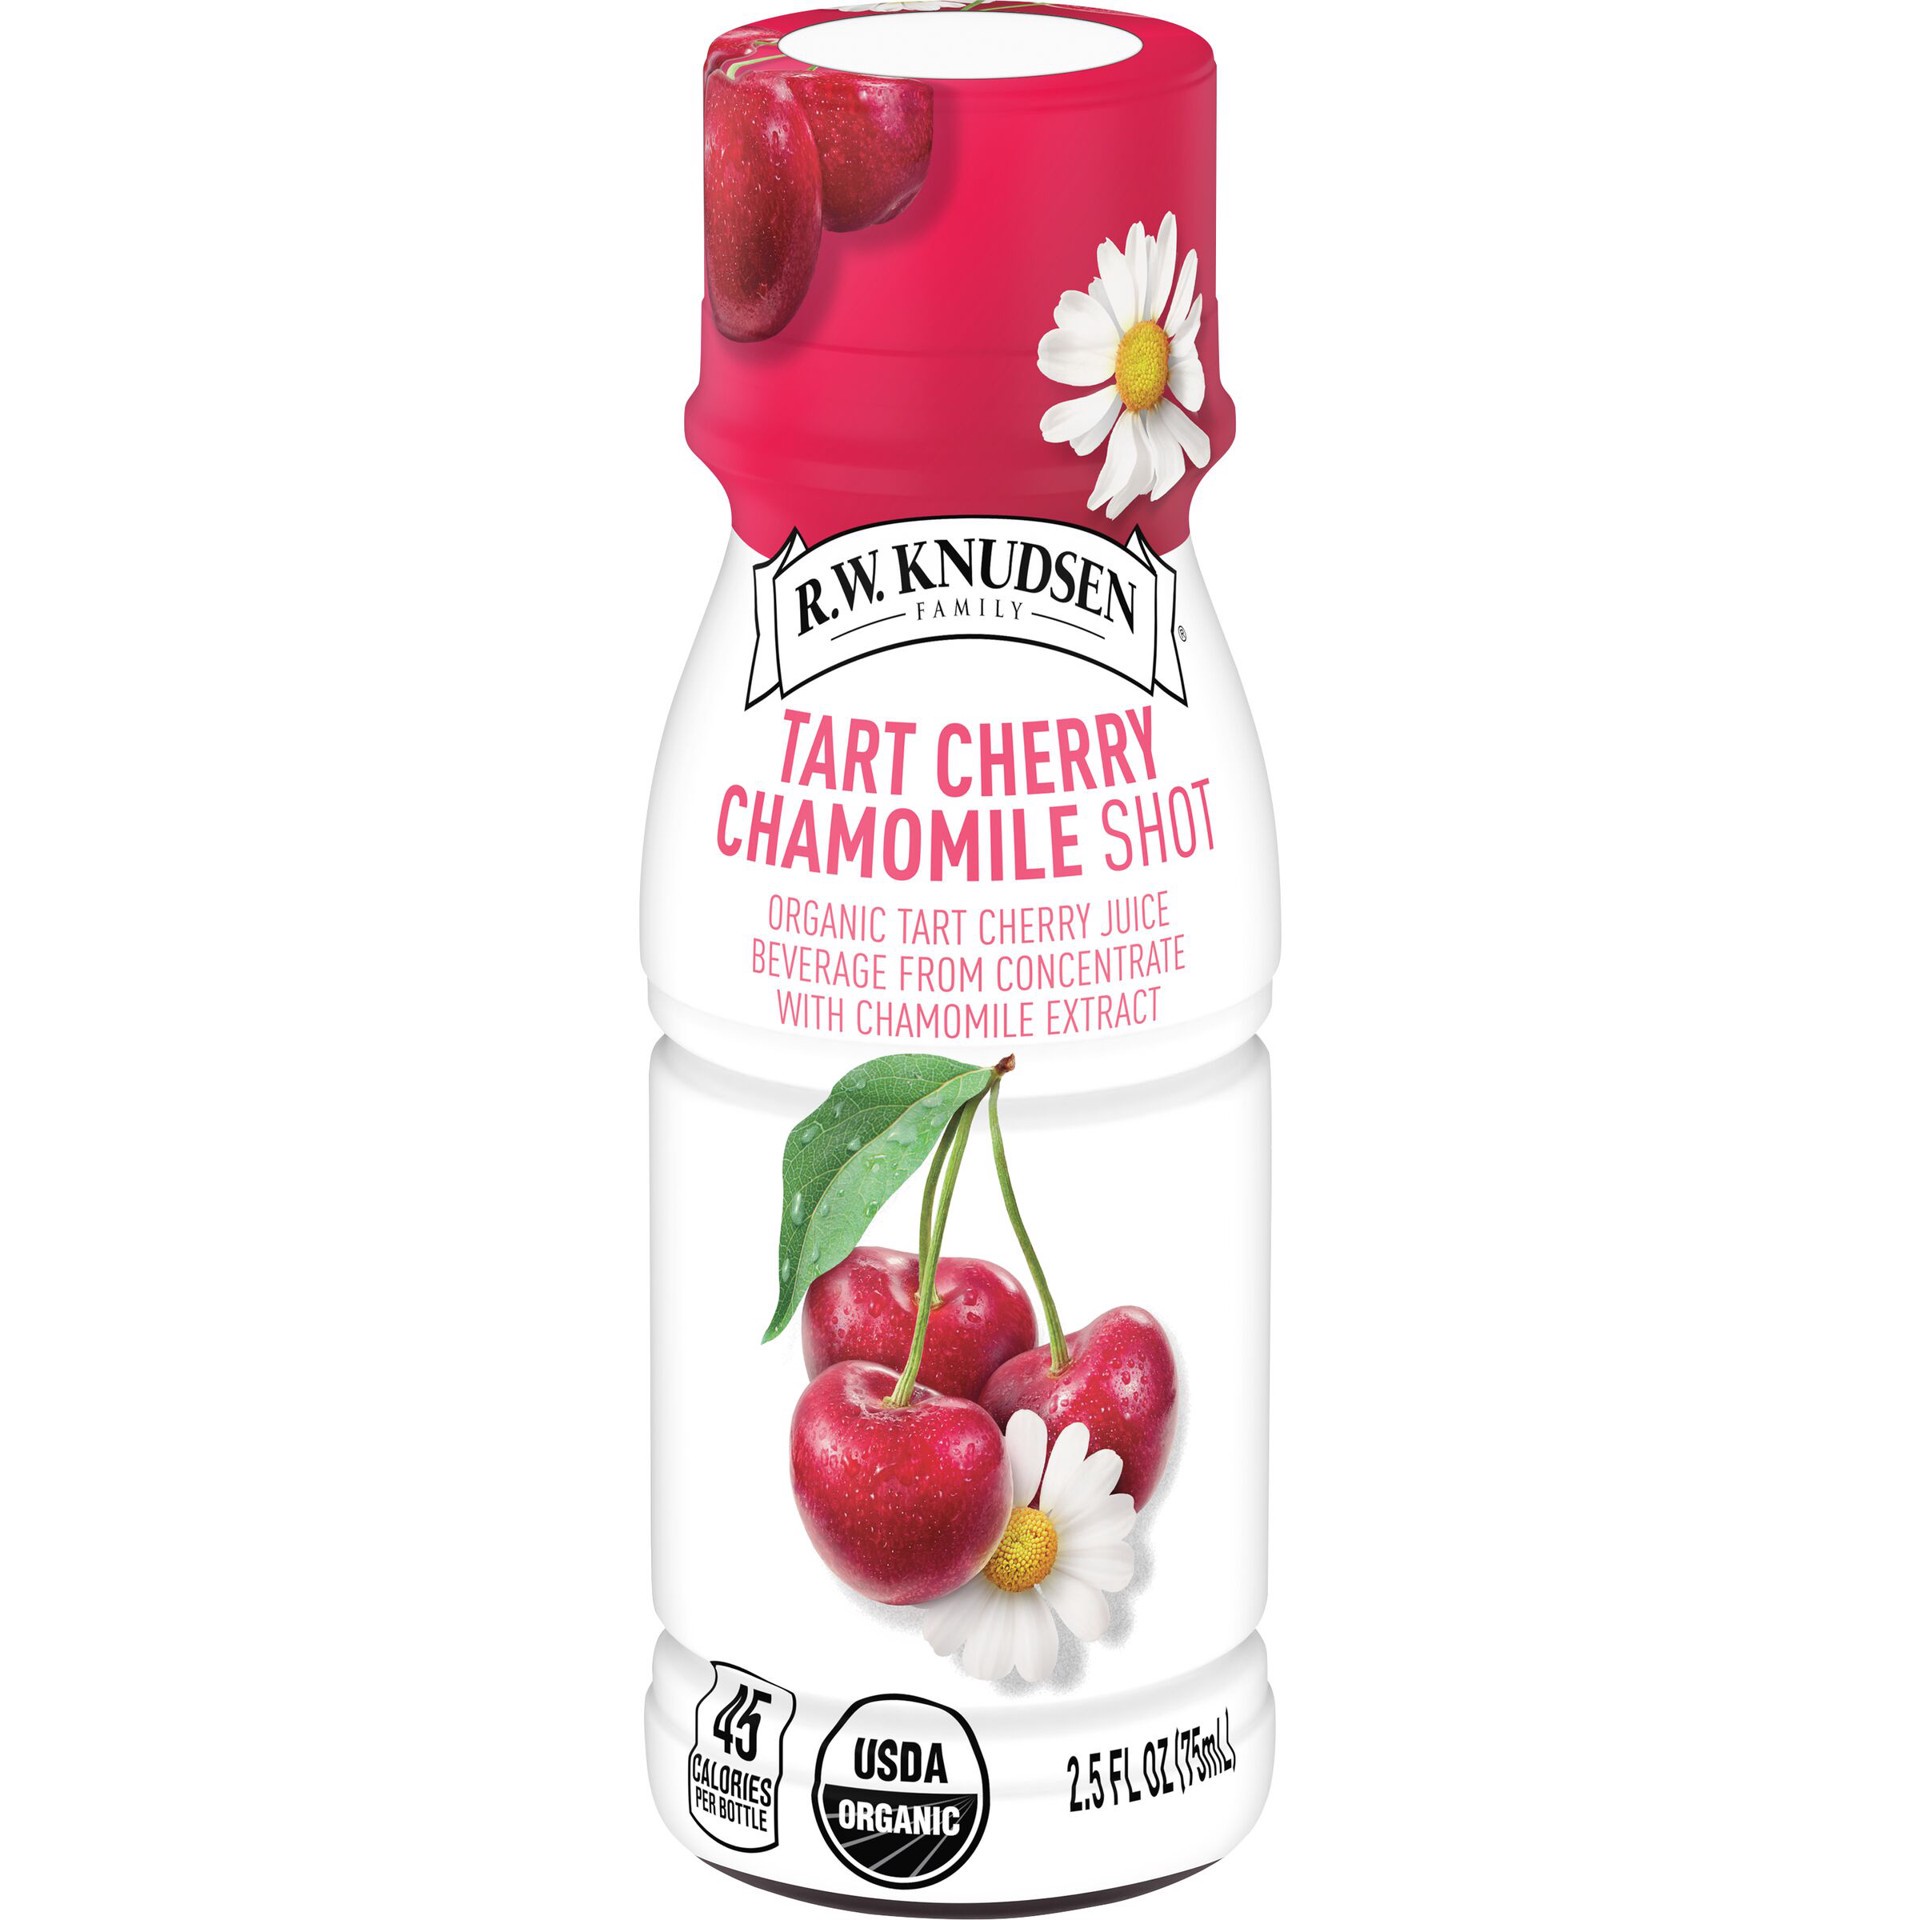 slide 1 of 4, R.W. Knudsen Family Tart Cherry Chamomile Shot, Organic Juice Beverage Shot, 2.5 oz